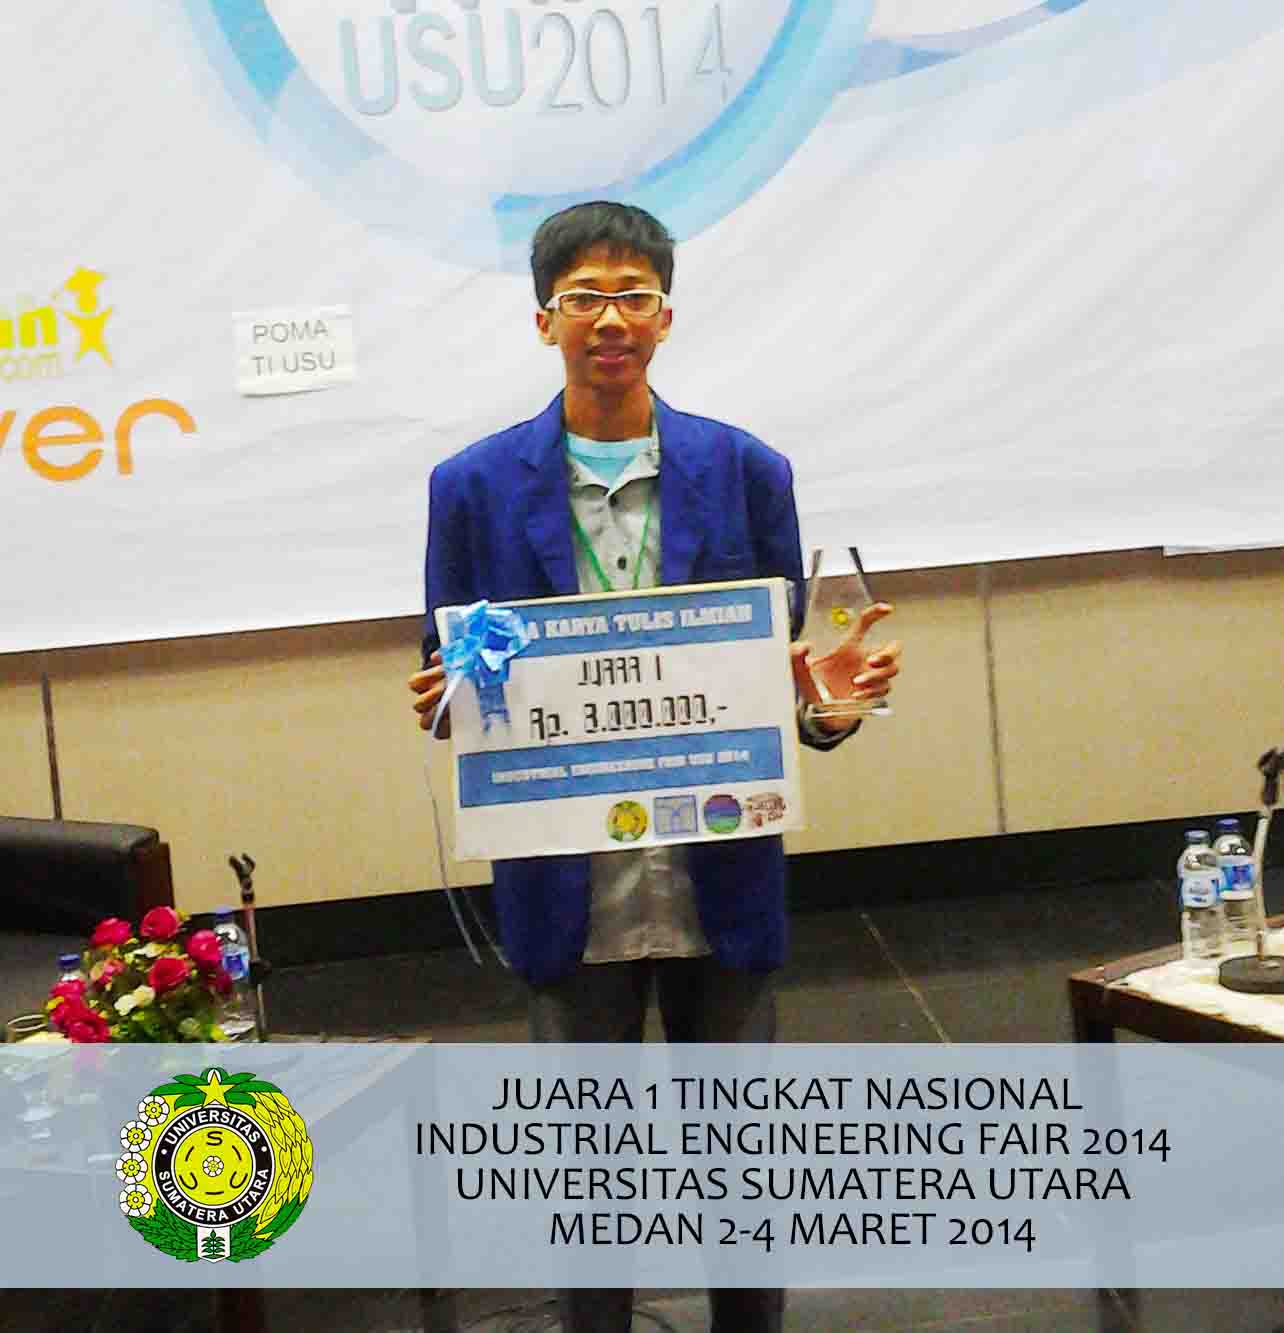 Foto Industrial Engineering Fair USU 2014, Universitas Sumatera Utara